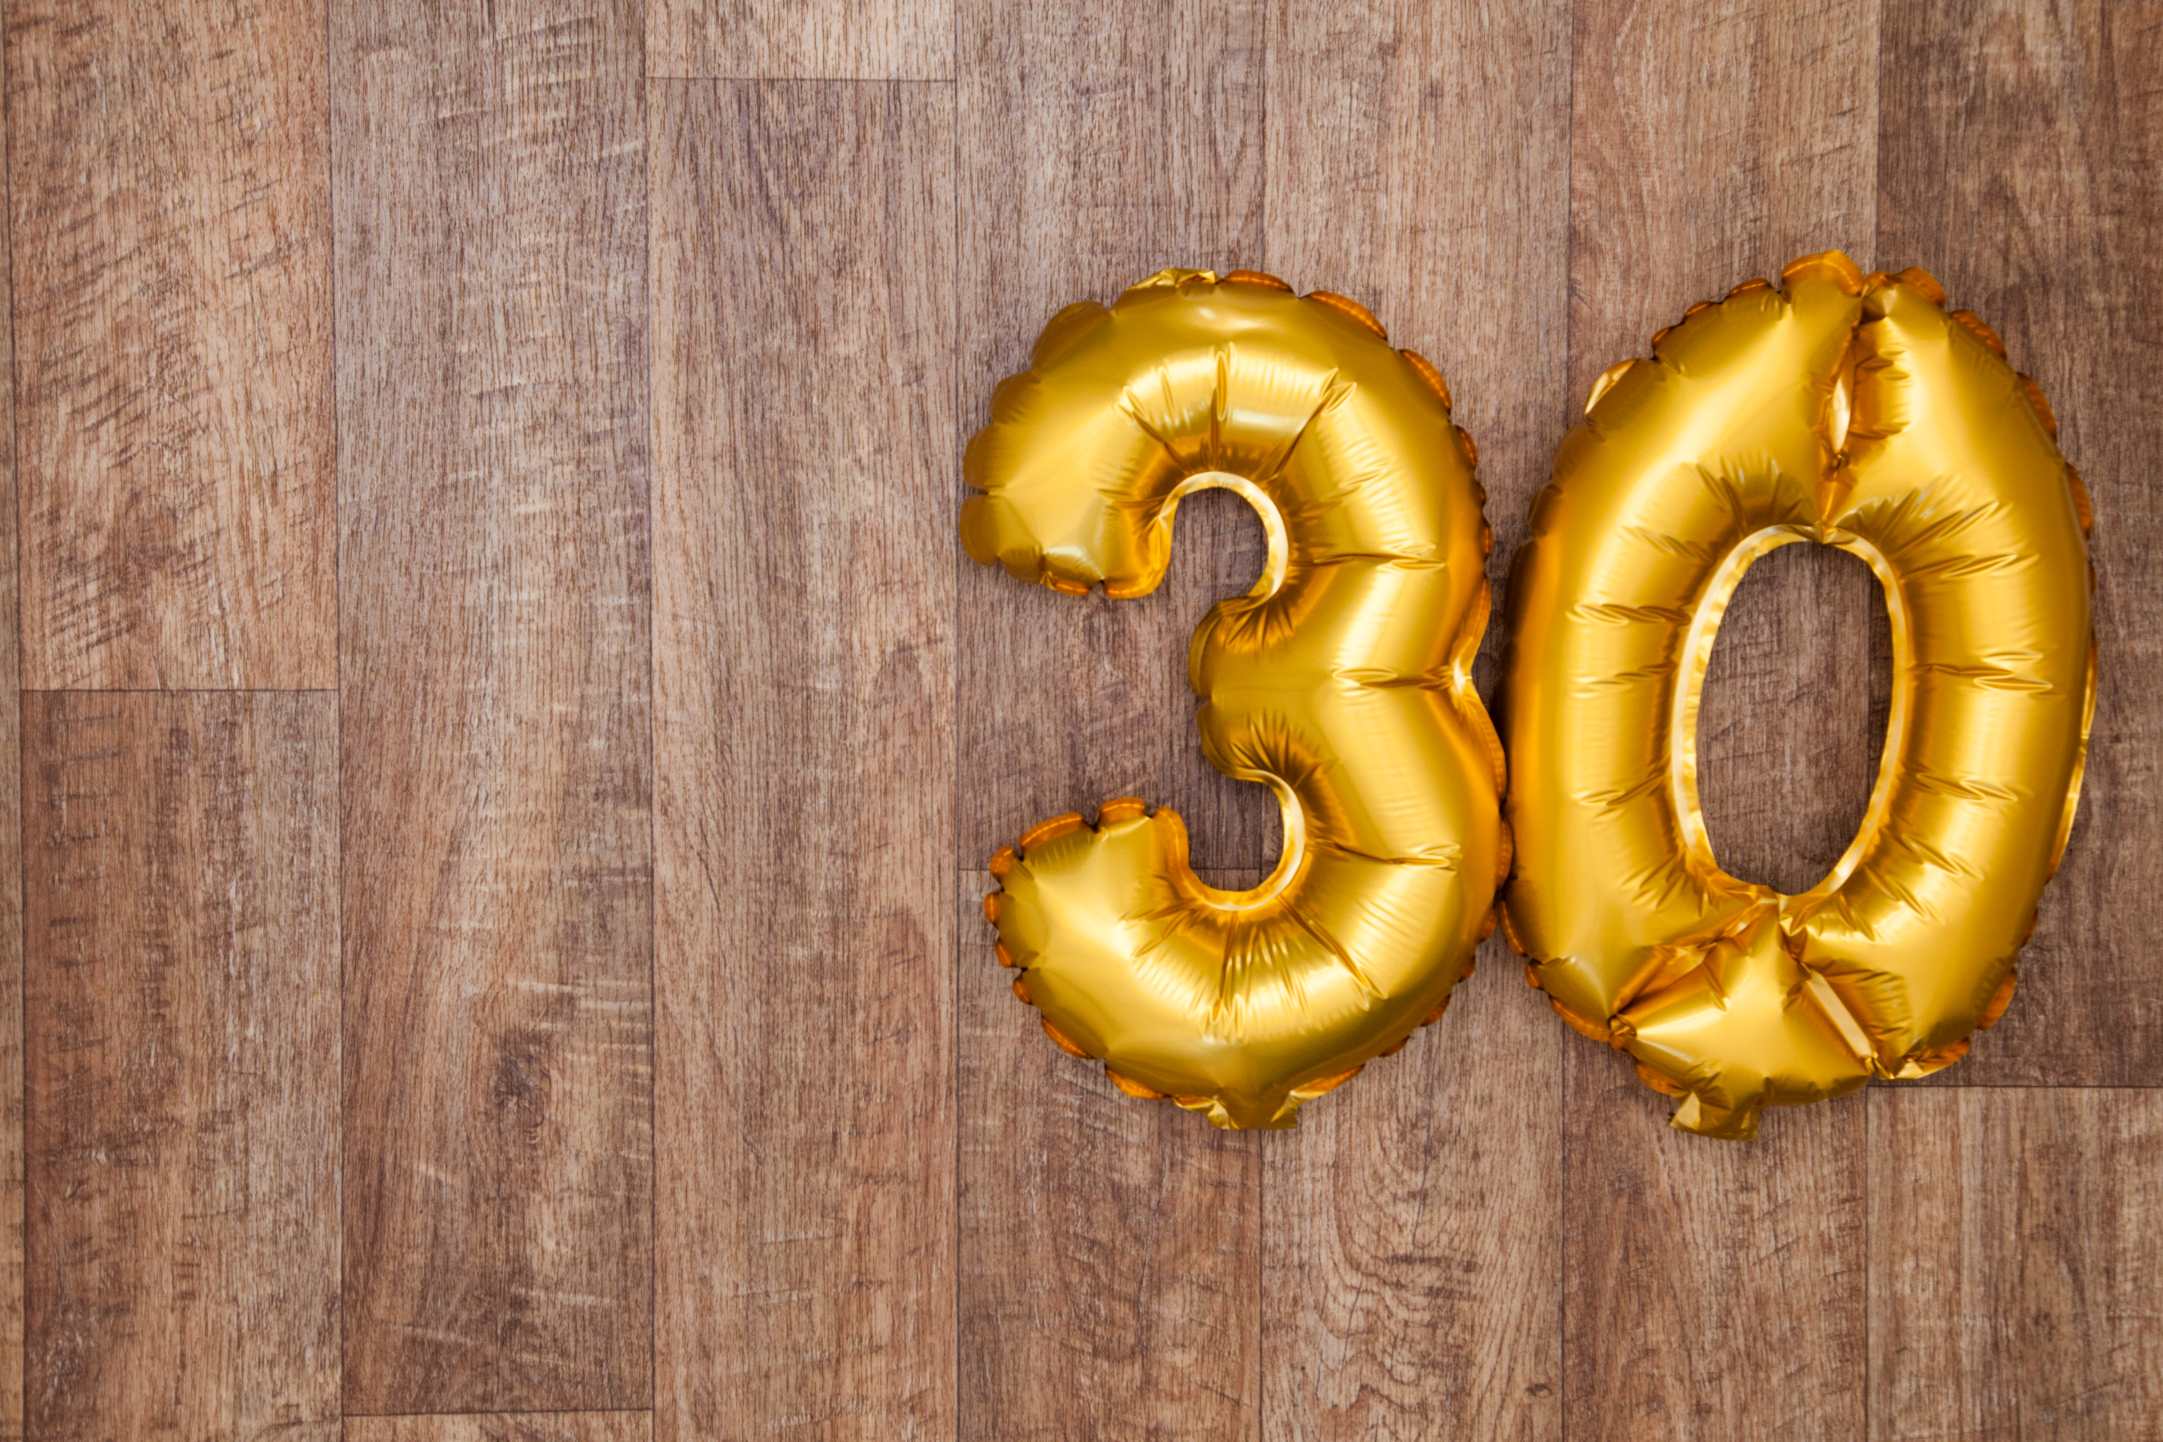 30 gold birthday/celebration balloon